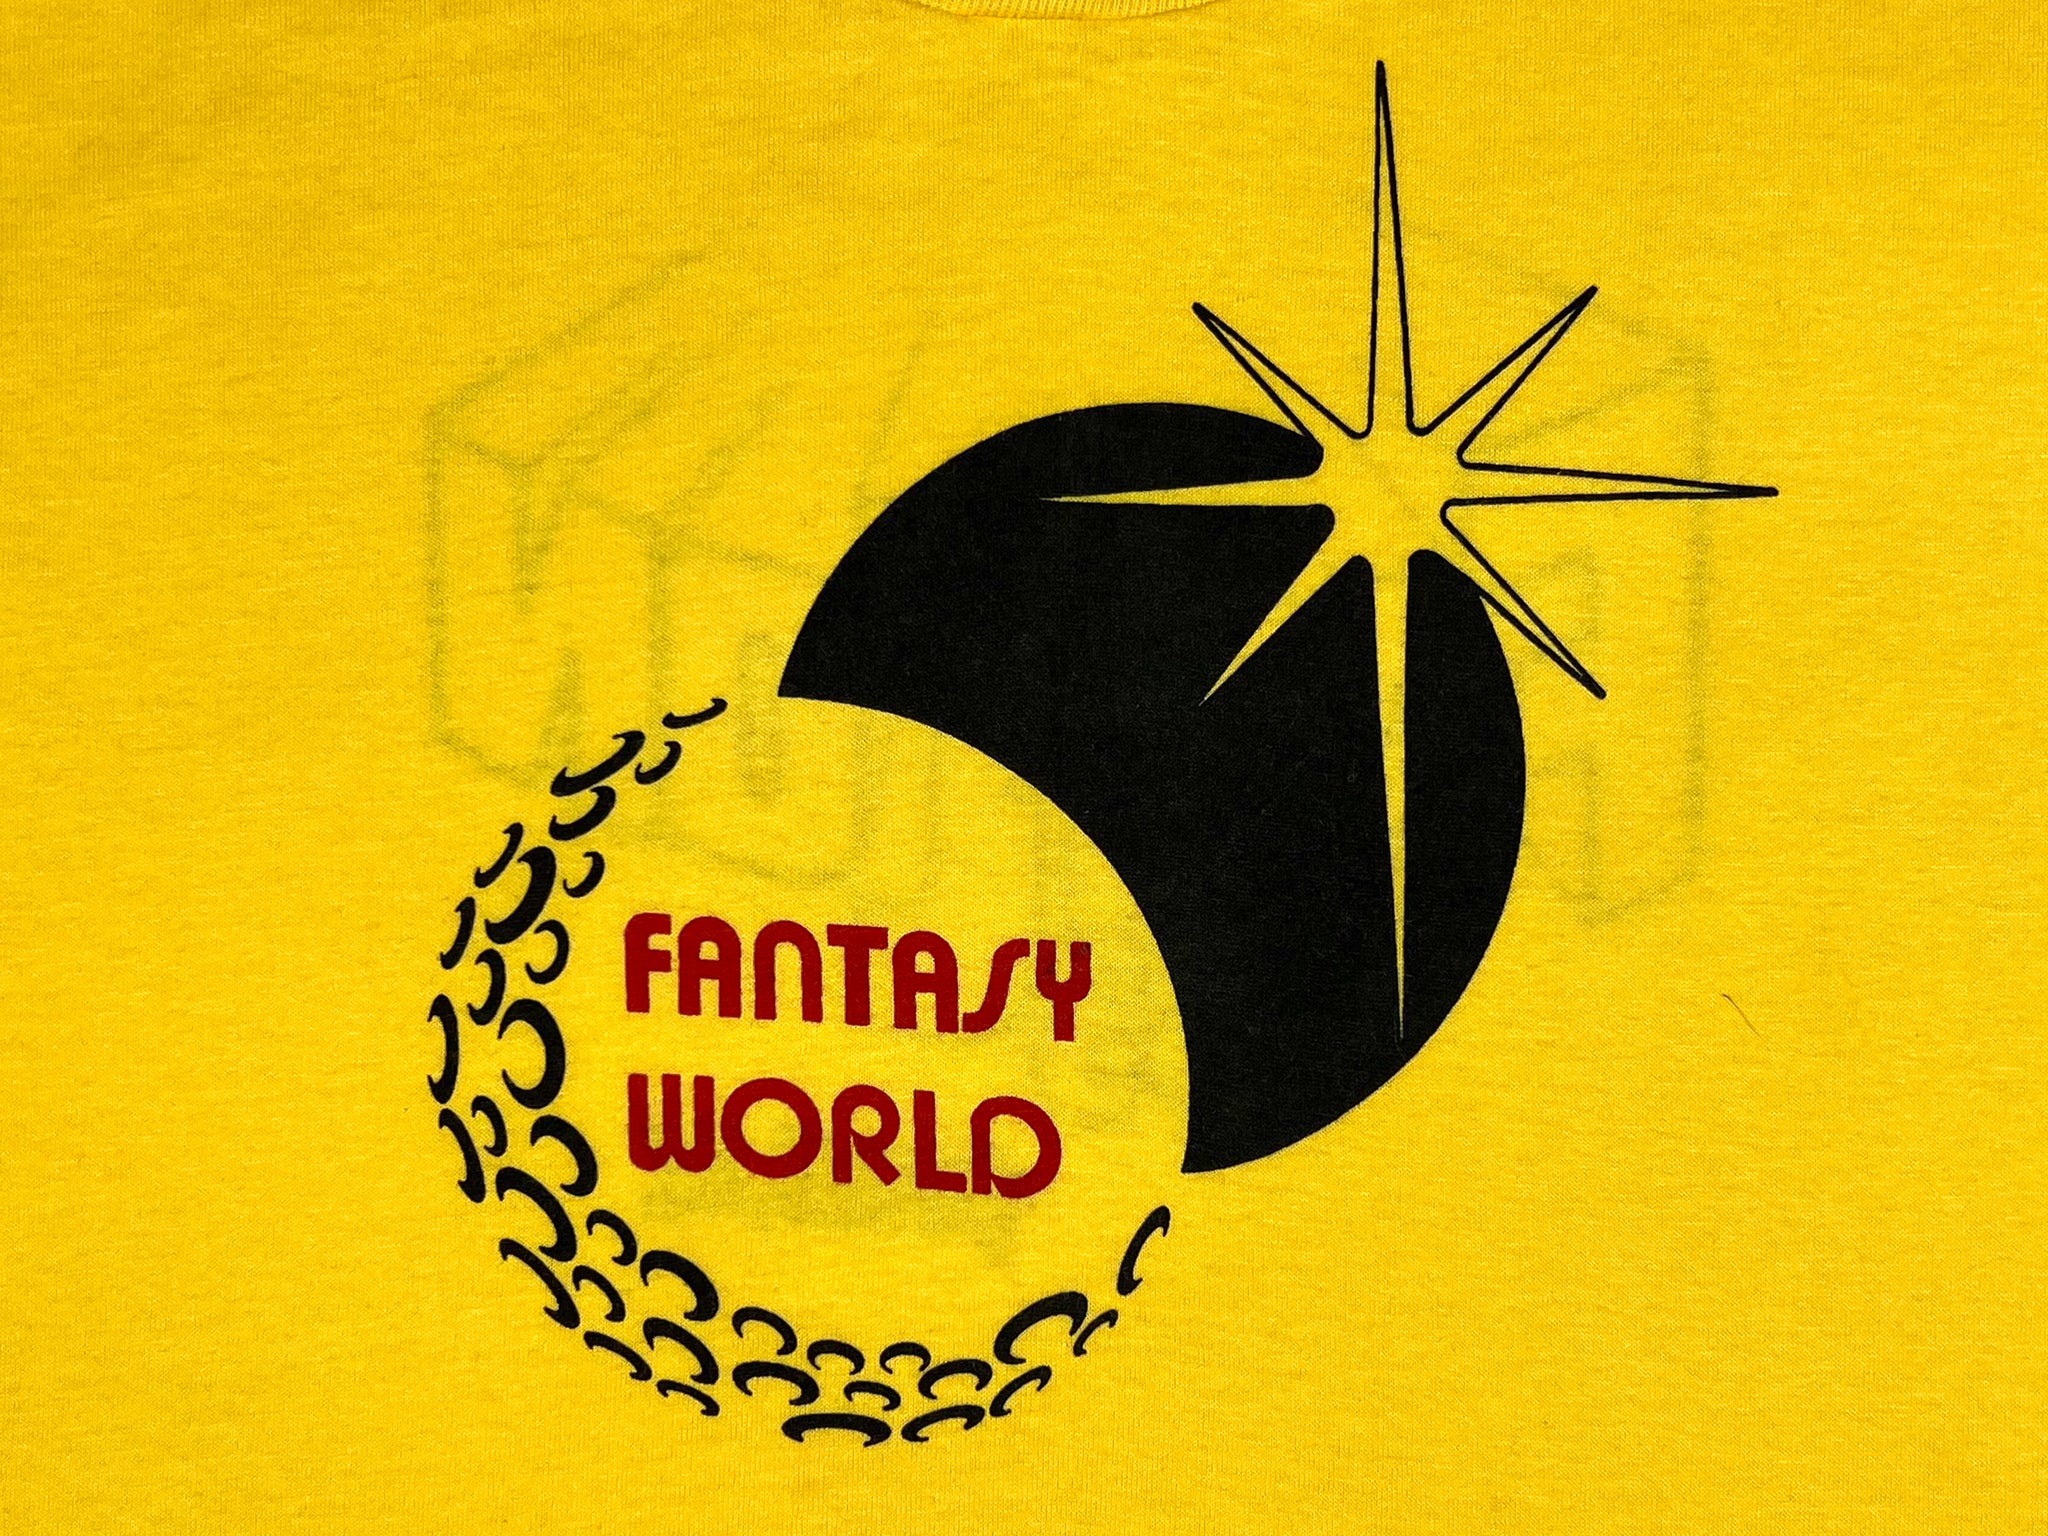 Fantasy World x Fan-Con 1983 T-Shirt